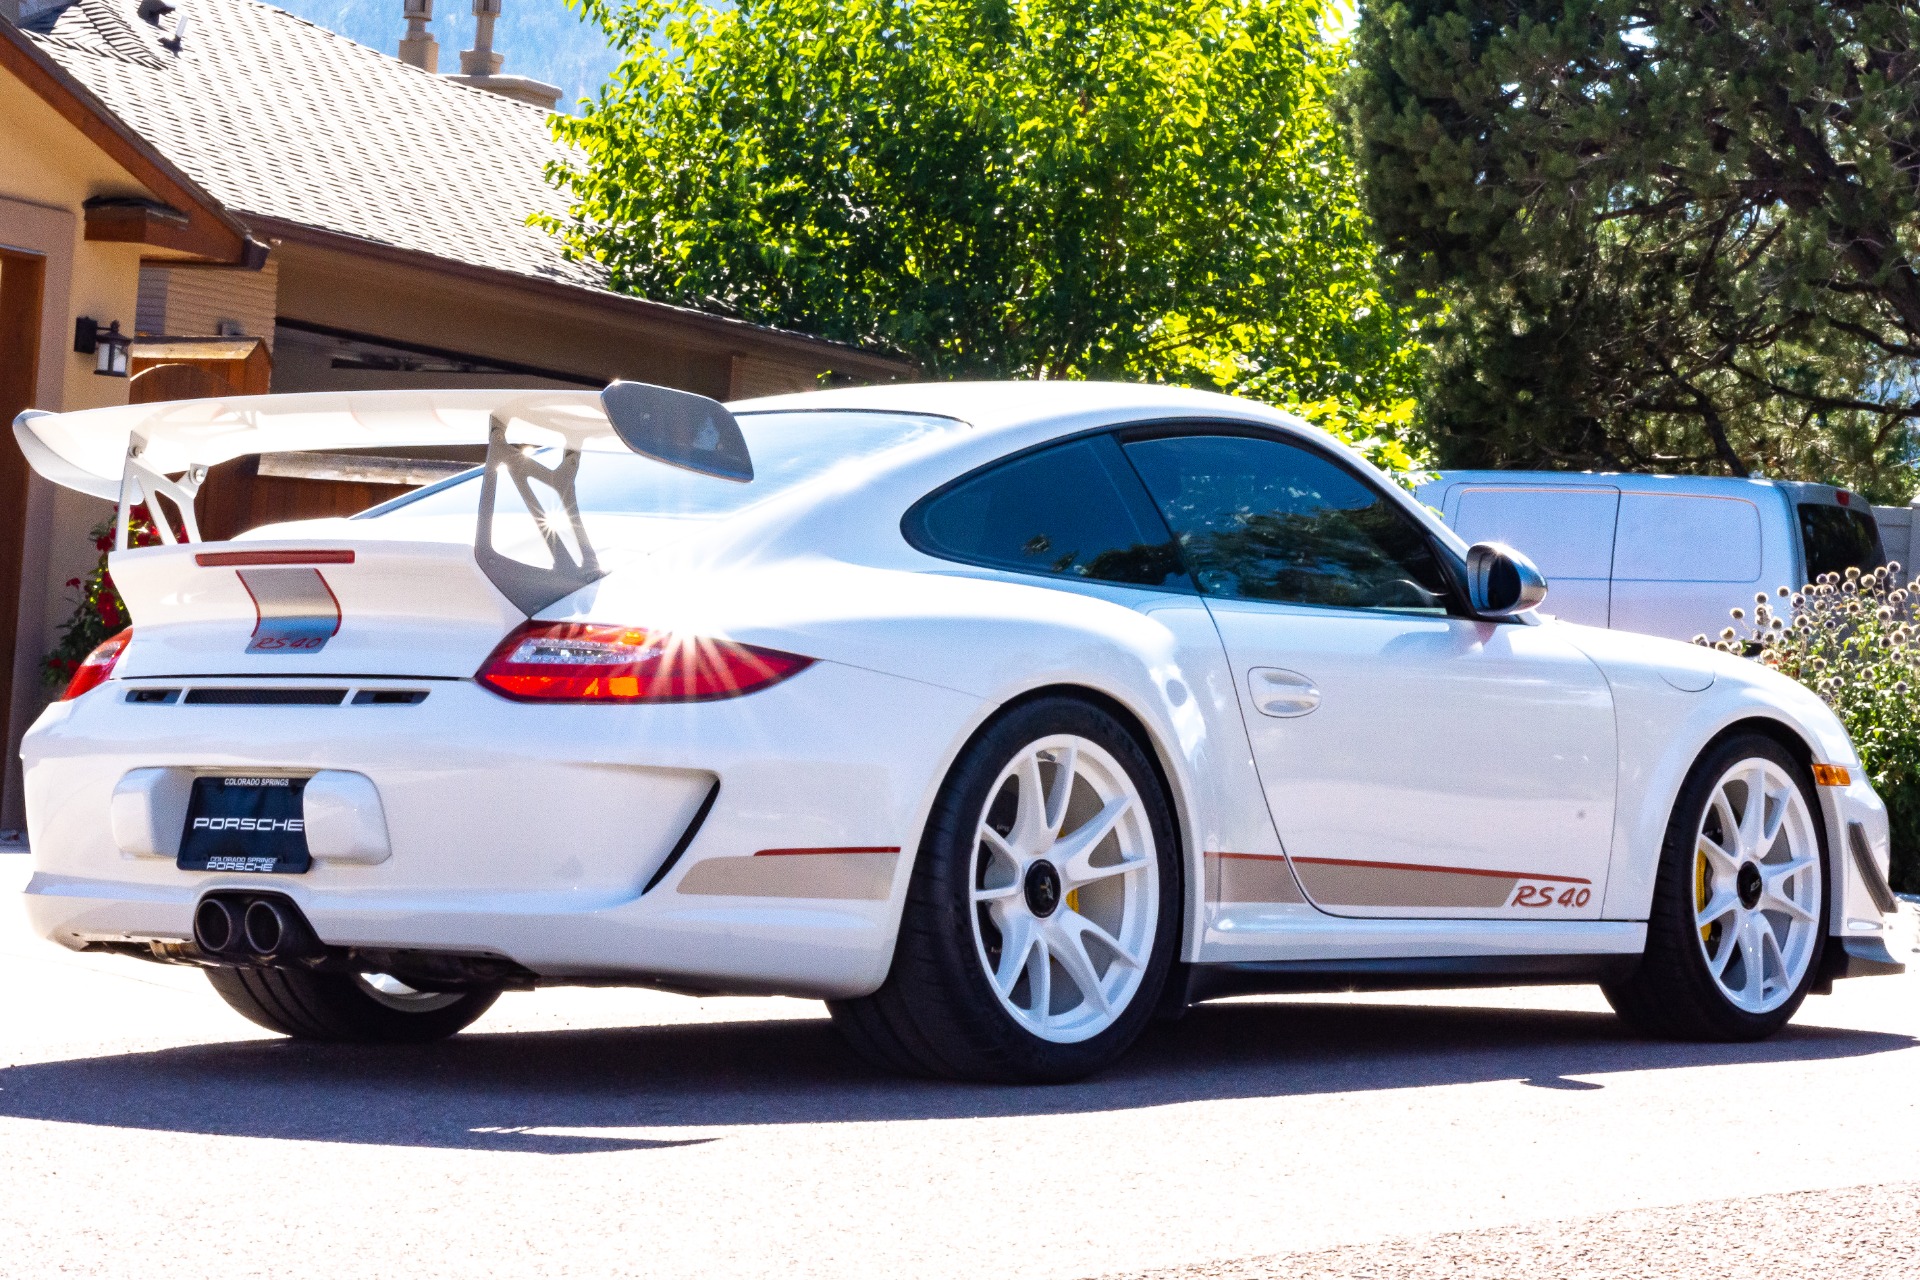 How Fast is the New Porsche 911 GT3 RS? - Porsche Colorado Springs